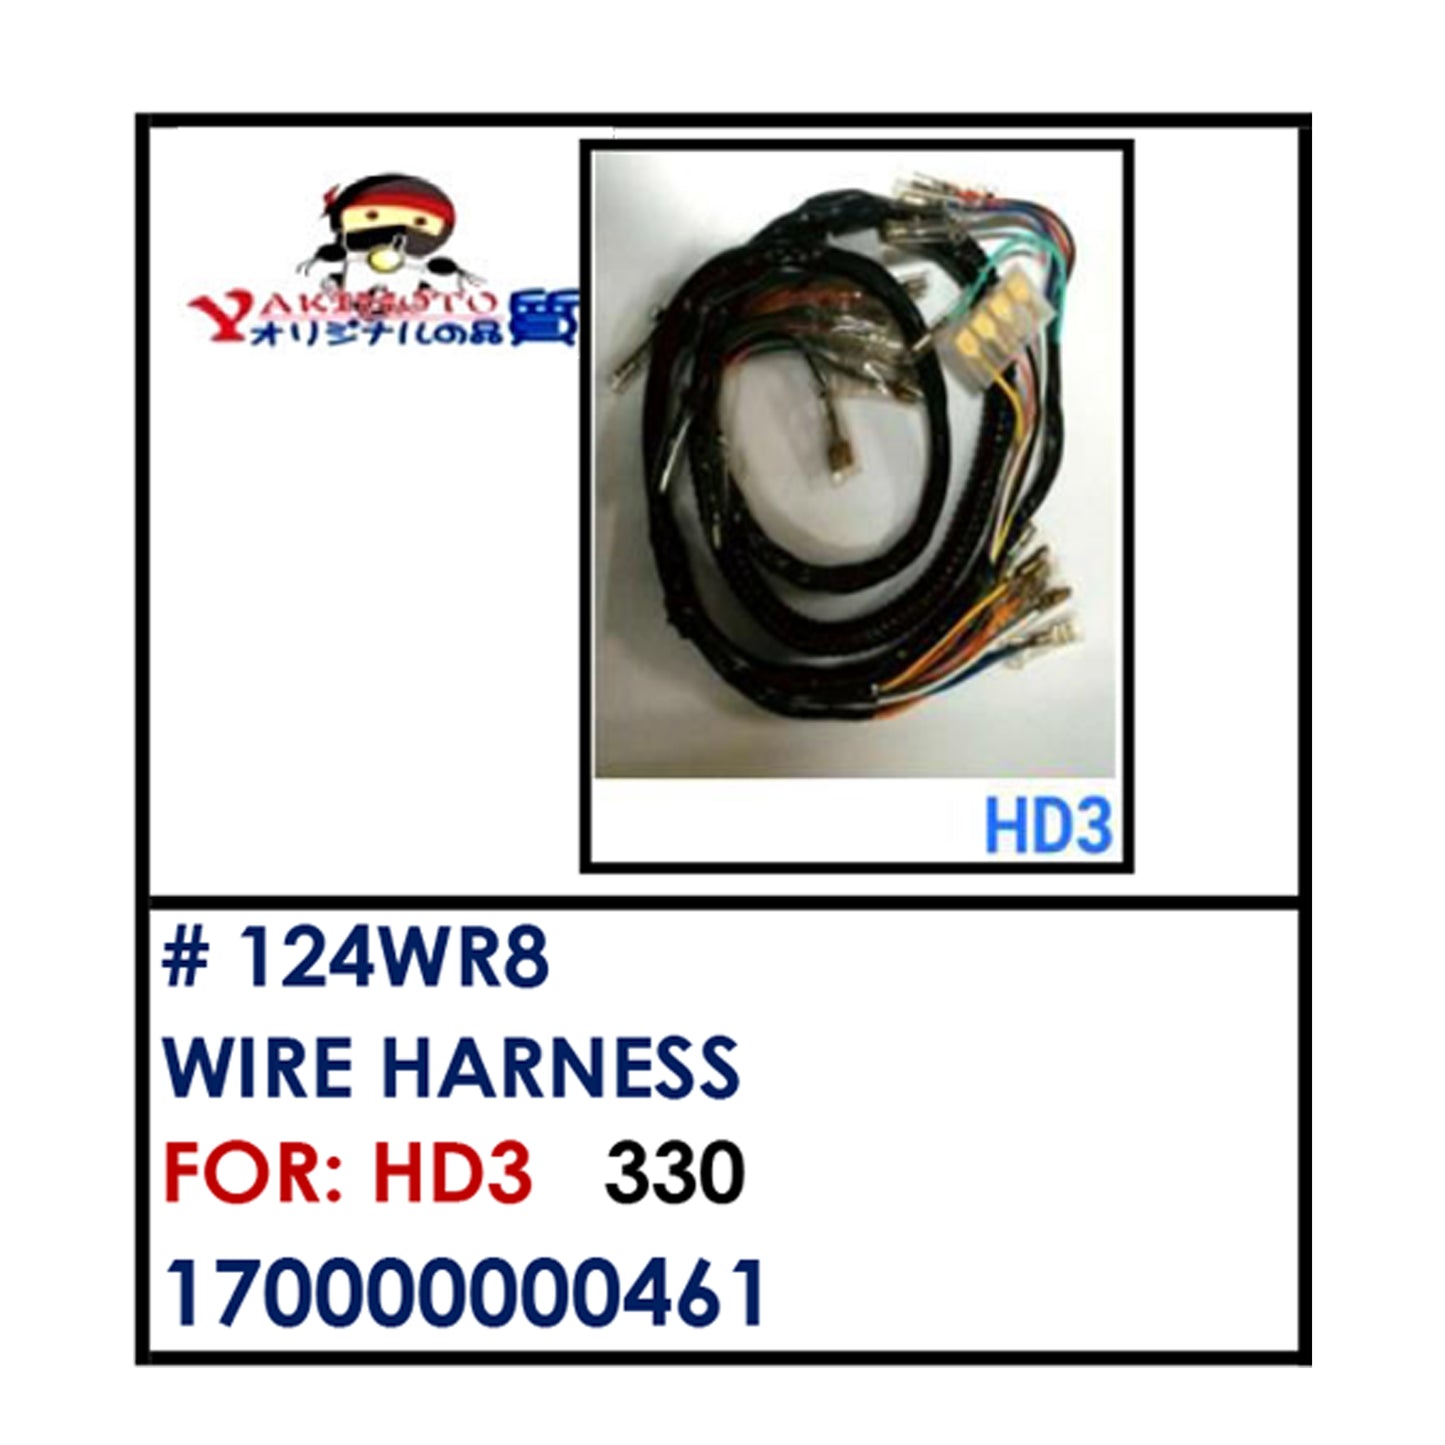 WIRE HARNESS (124WR8) - HD3 | YAKIMOTO - BESTPARTS.PH